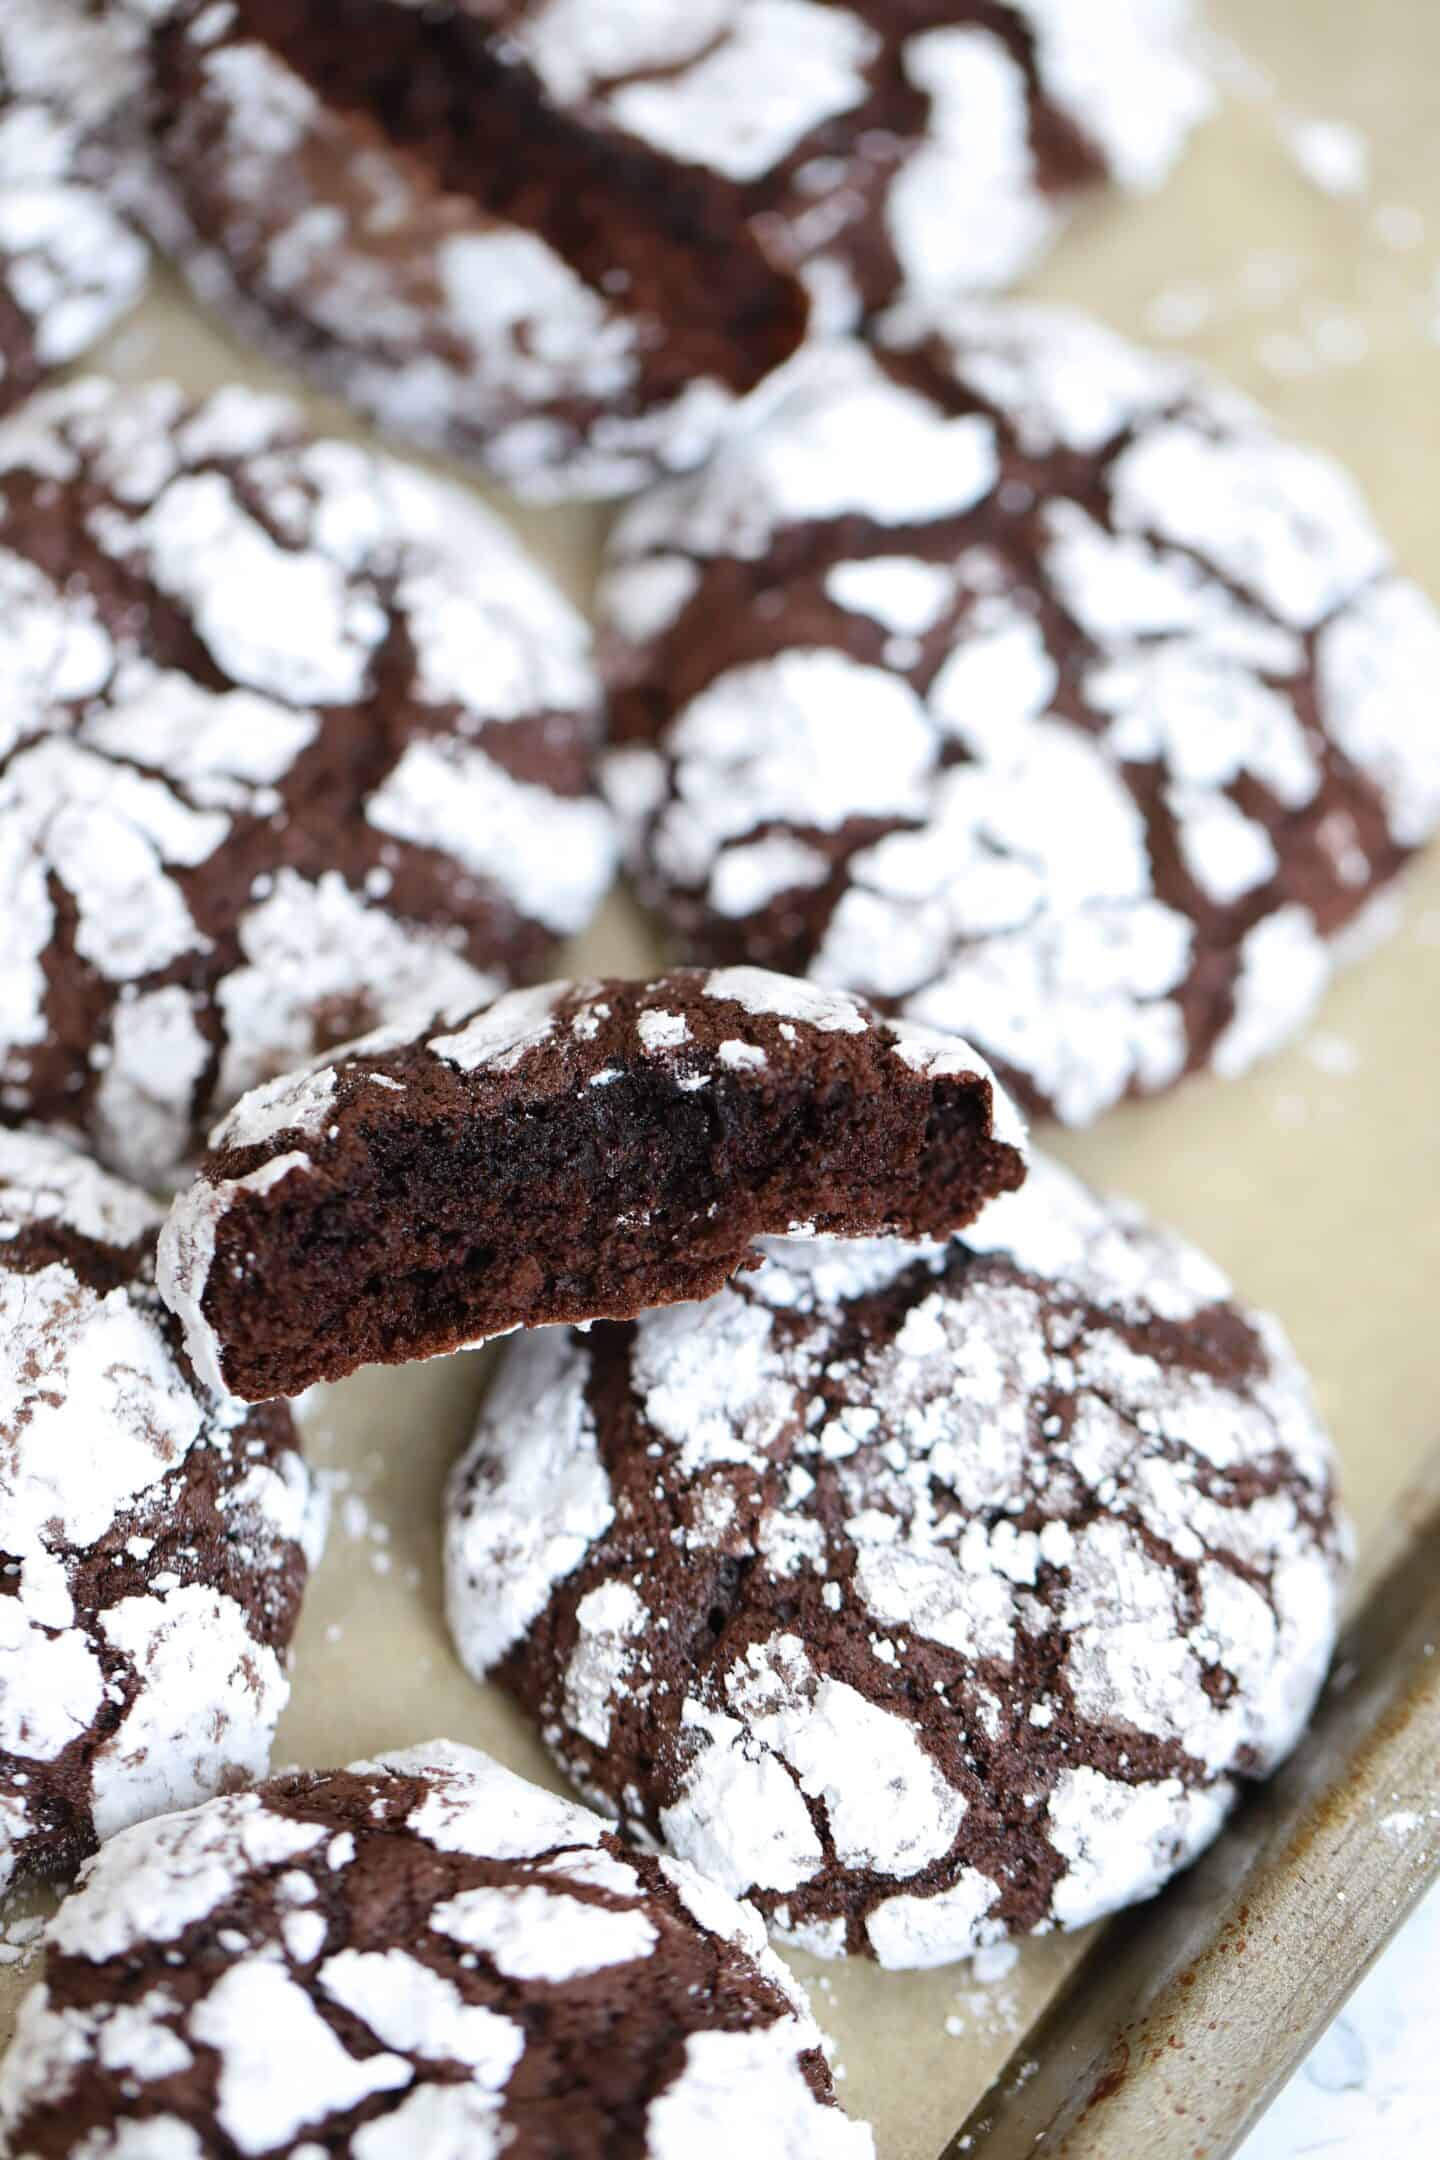 Chocolate fudge crinkle cookies on a baking sheet.